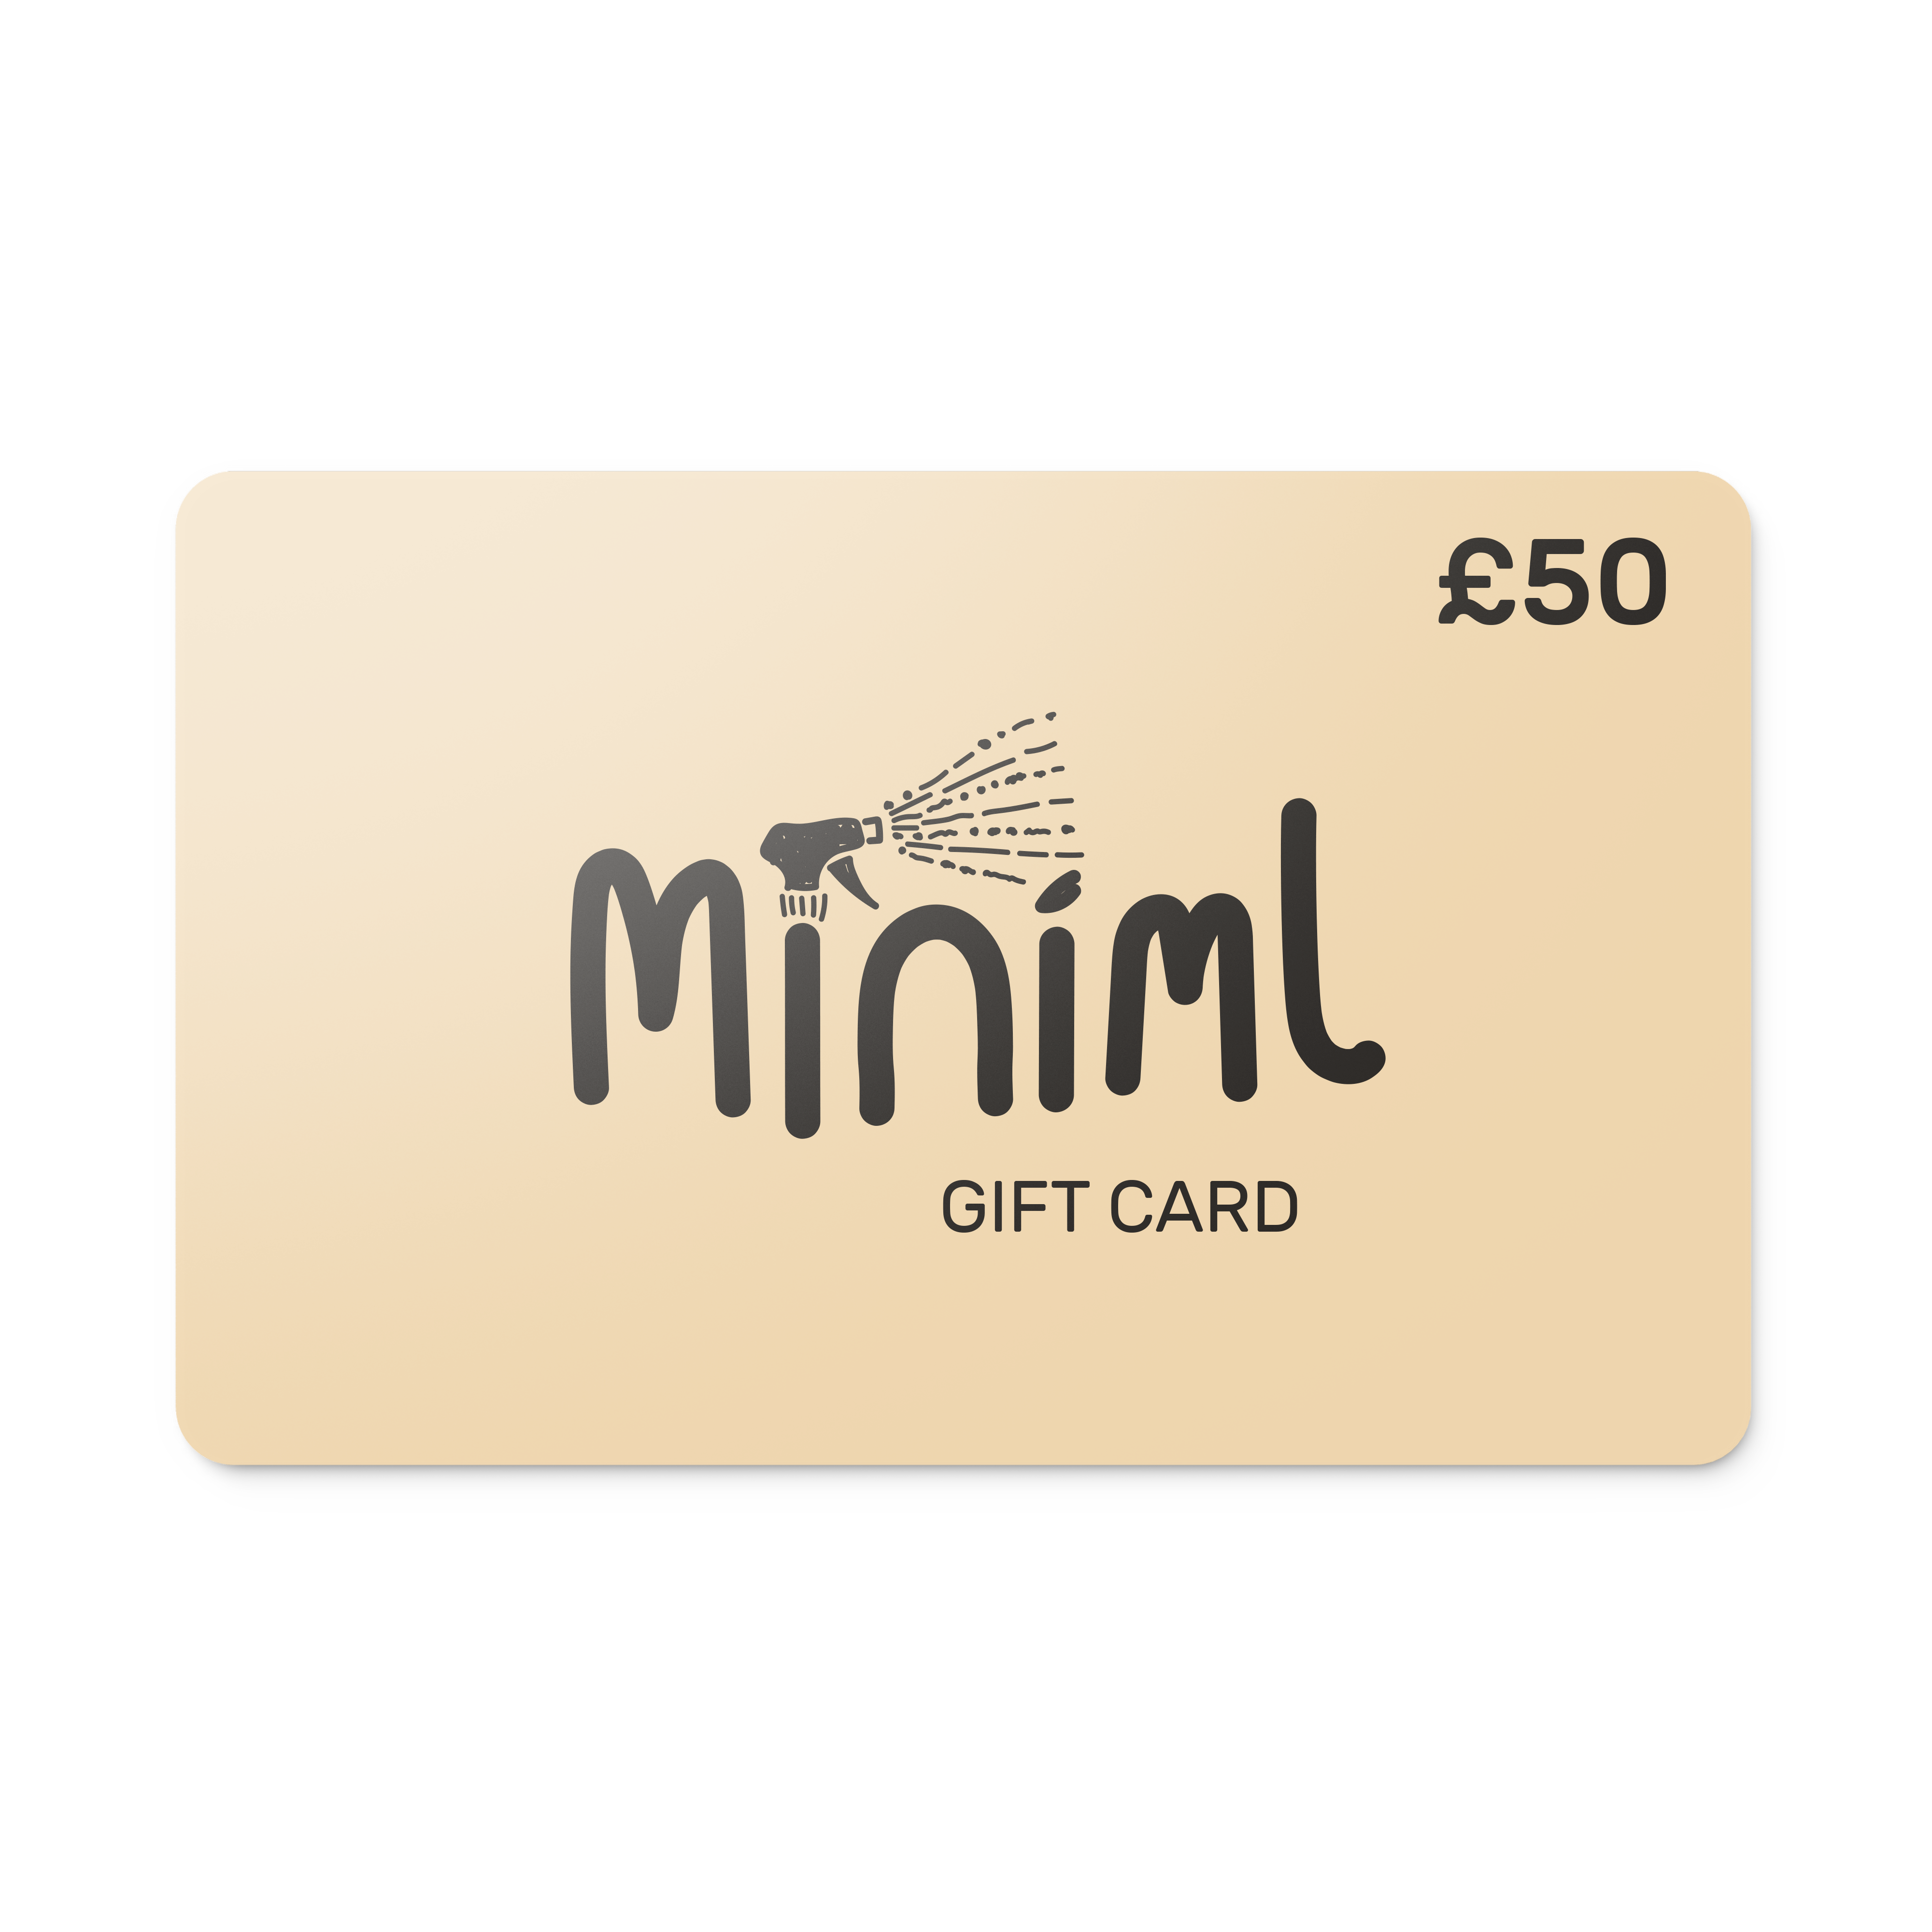 Miniml Gift Card